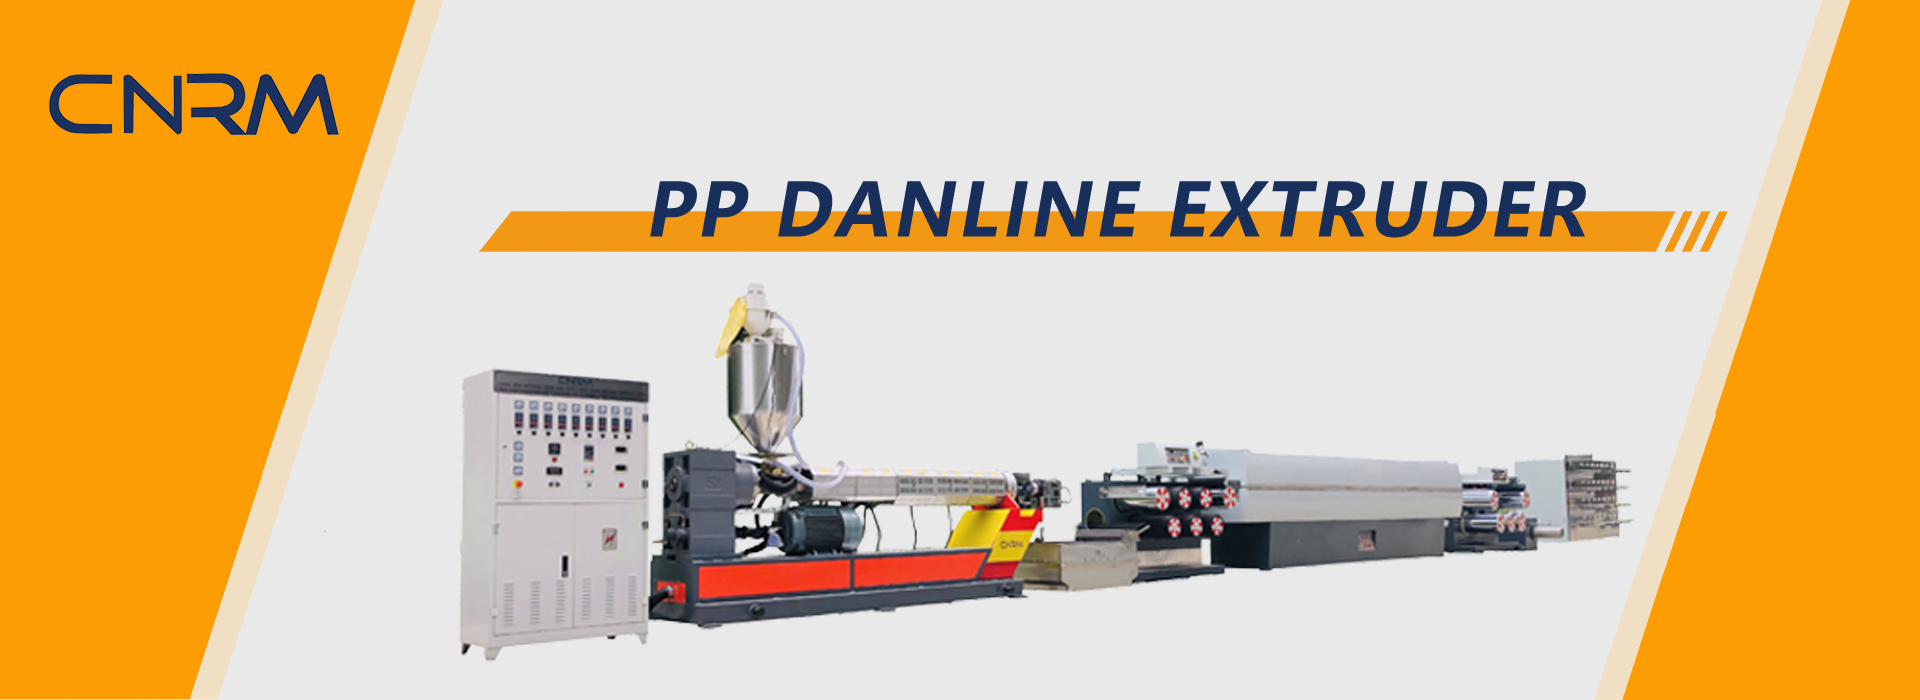 pp danline extruder1